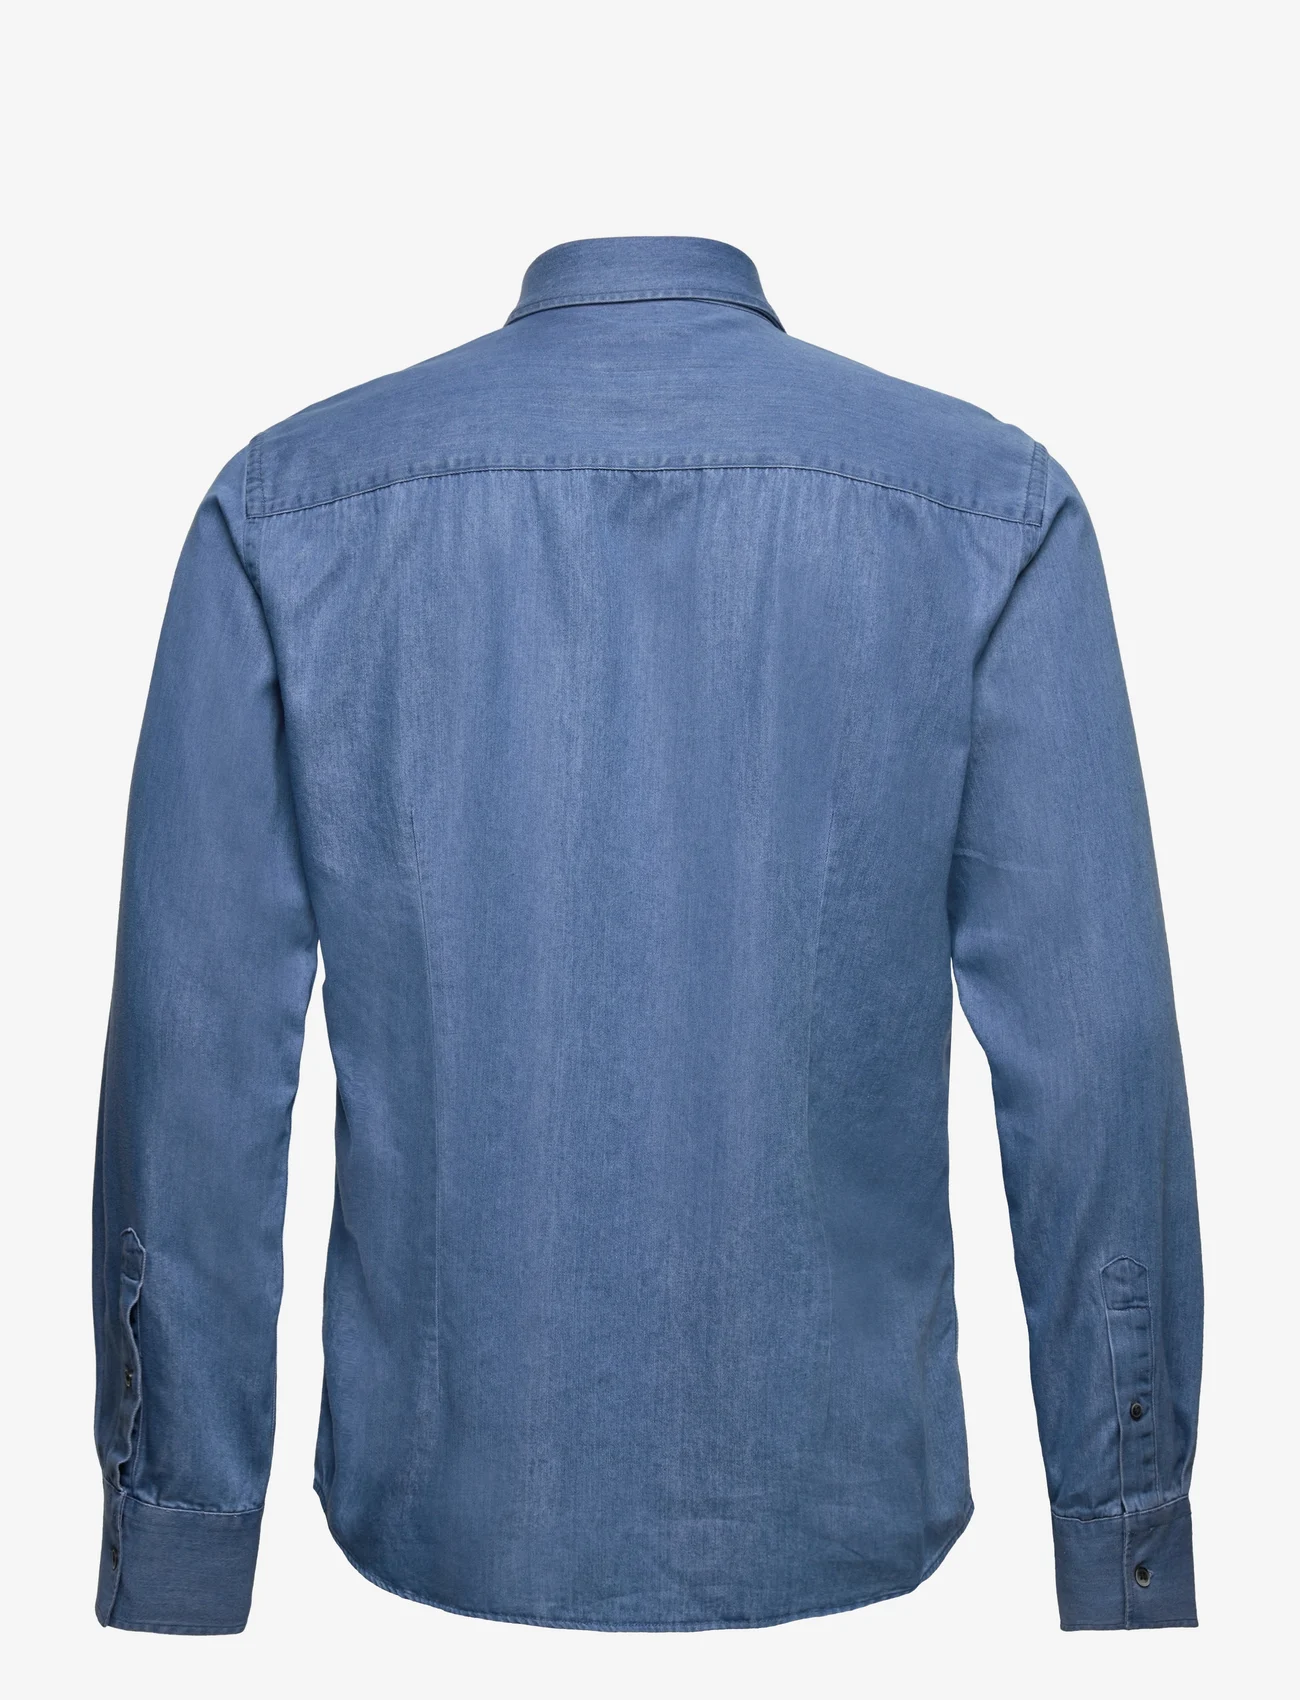 Bruun & Stengade - BS Vitoria Casual Slim Fit Shirt - denim shirts - blue - 1